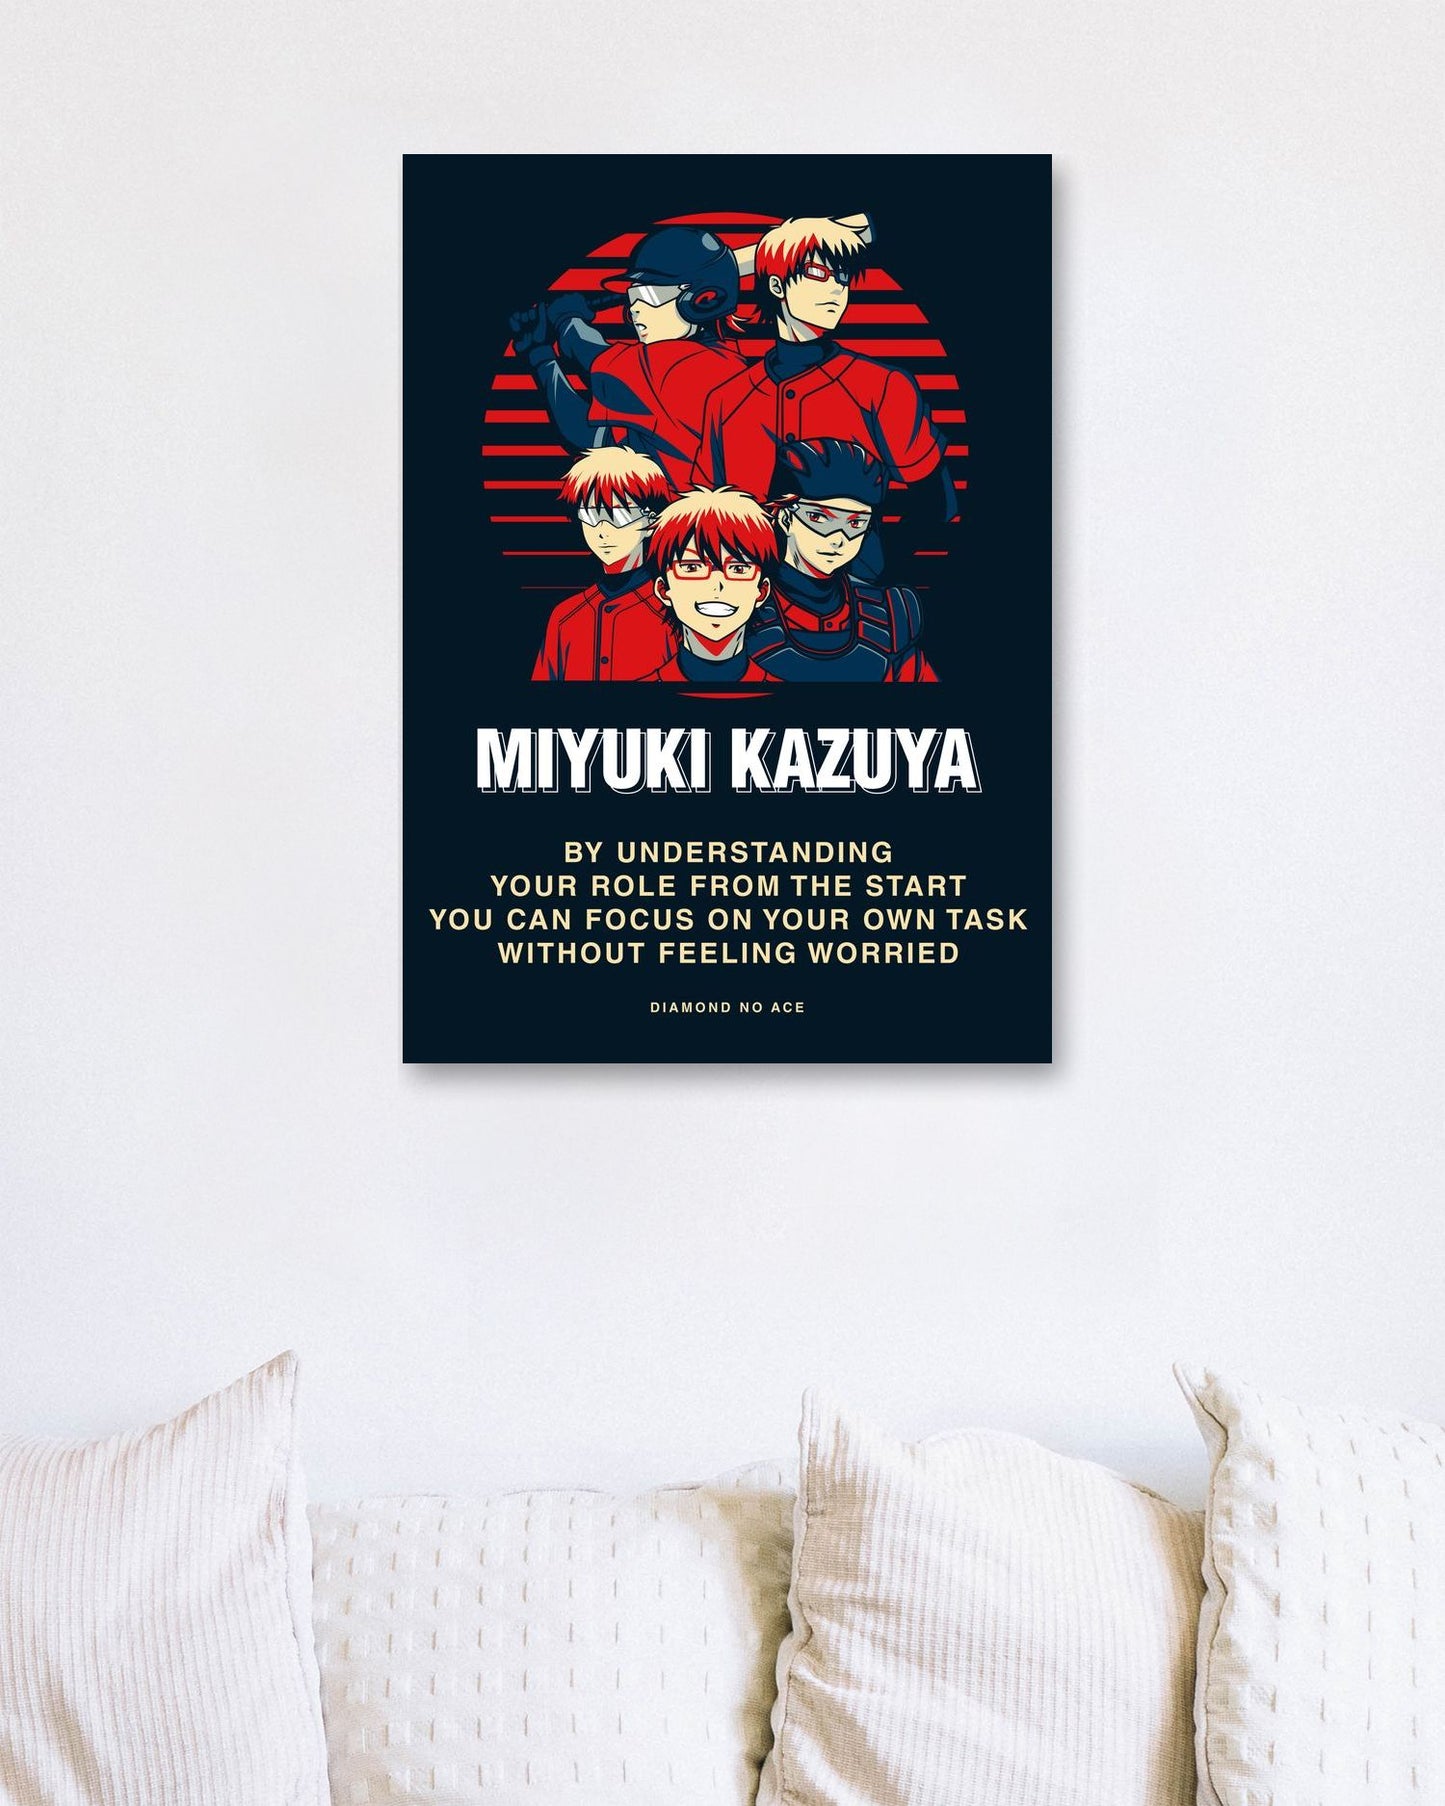 MIyuki Kazuya Quotes "Focus" - @HidayahCreative